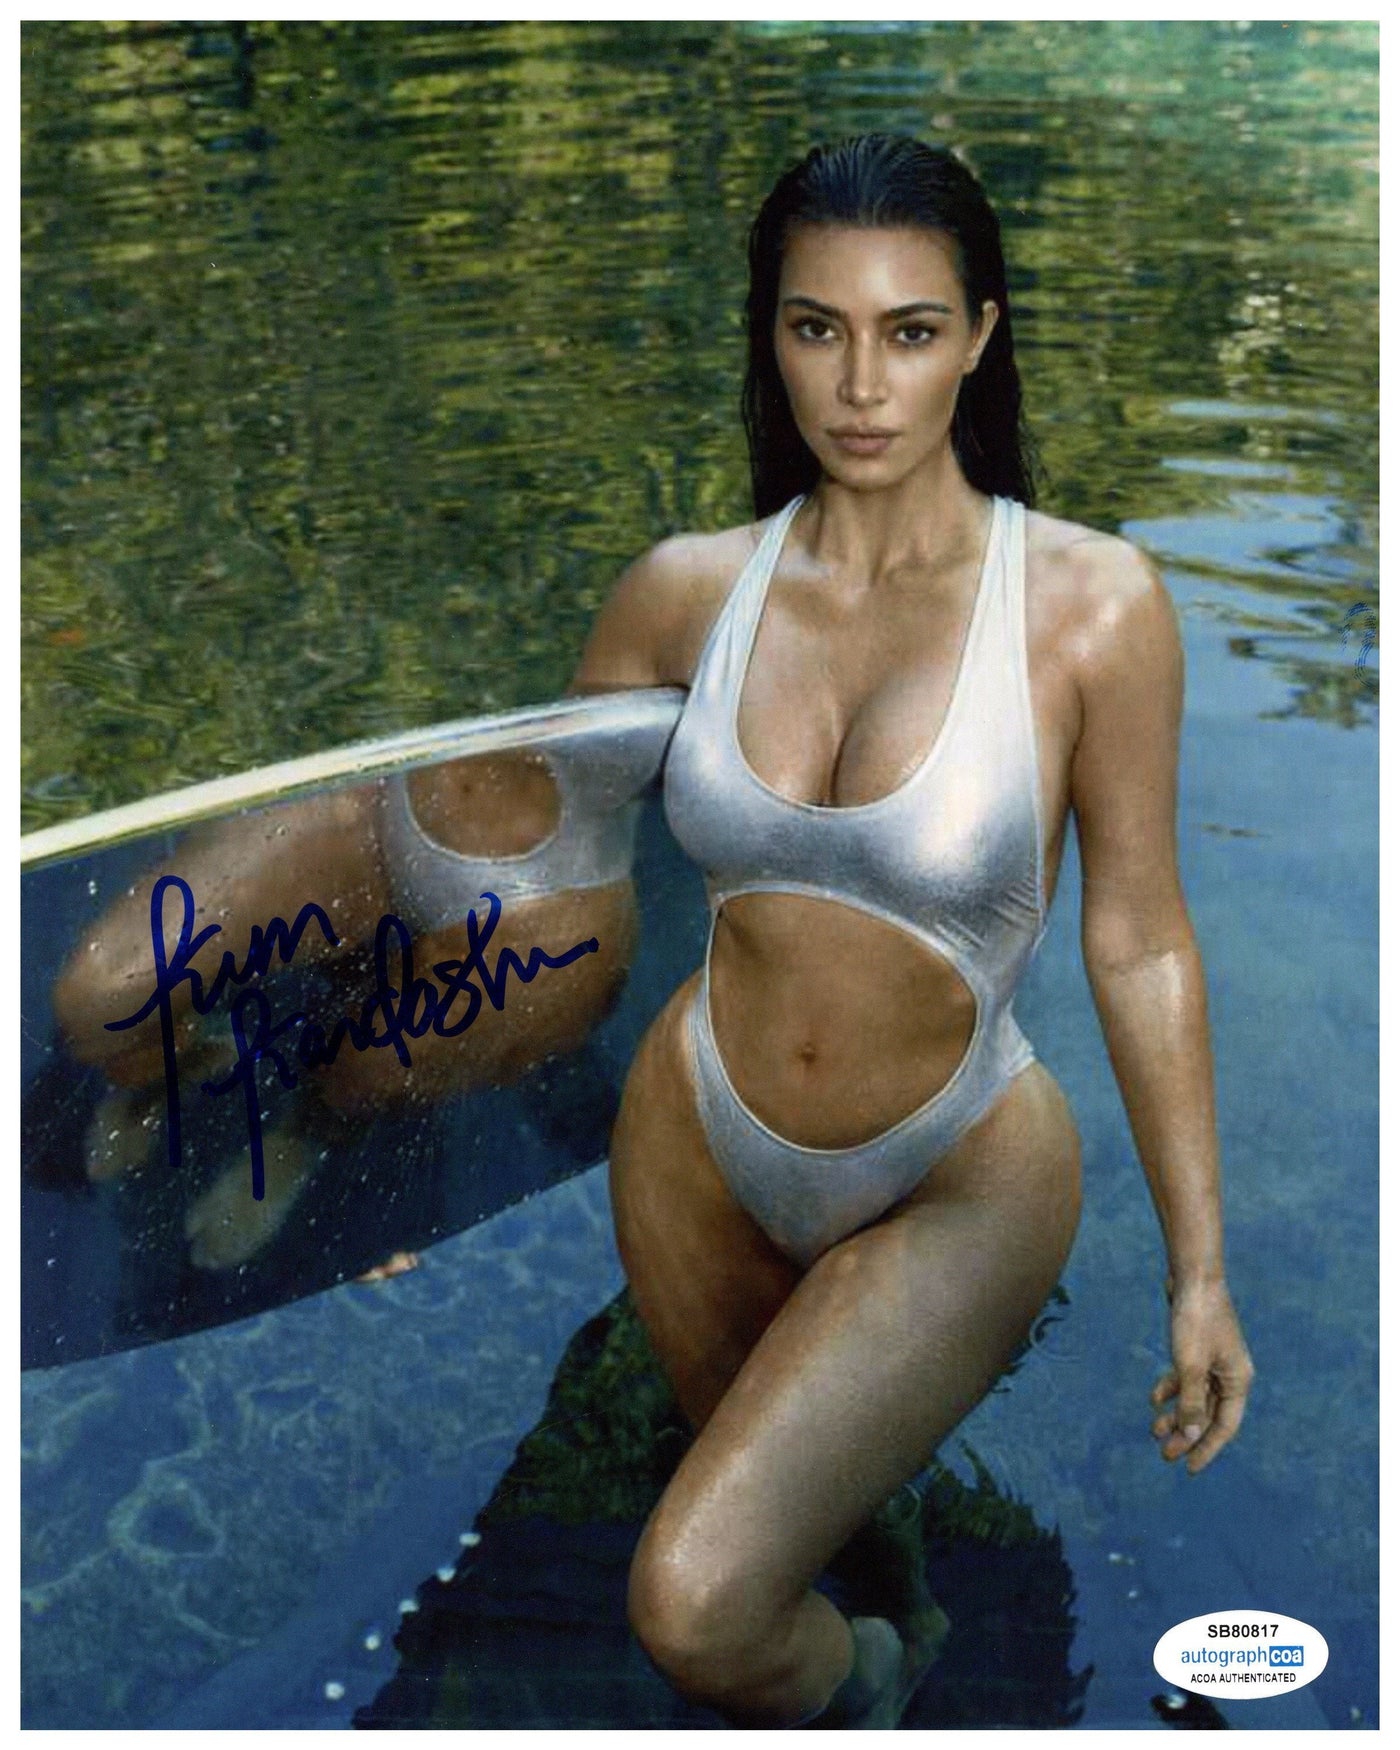 Kim Kardashian Autographed Signed 8x10 Photograph The Kardashians AutographCOA 2